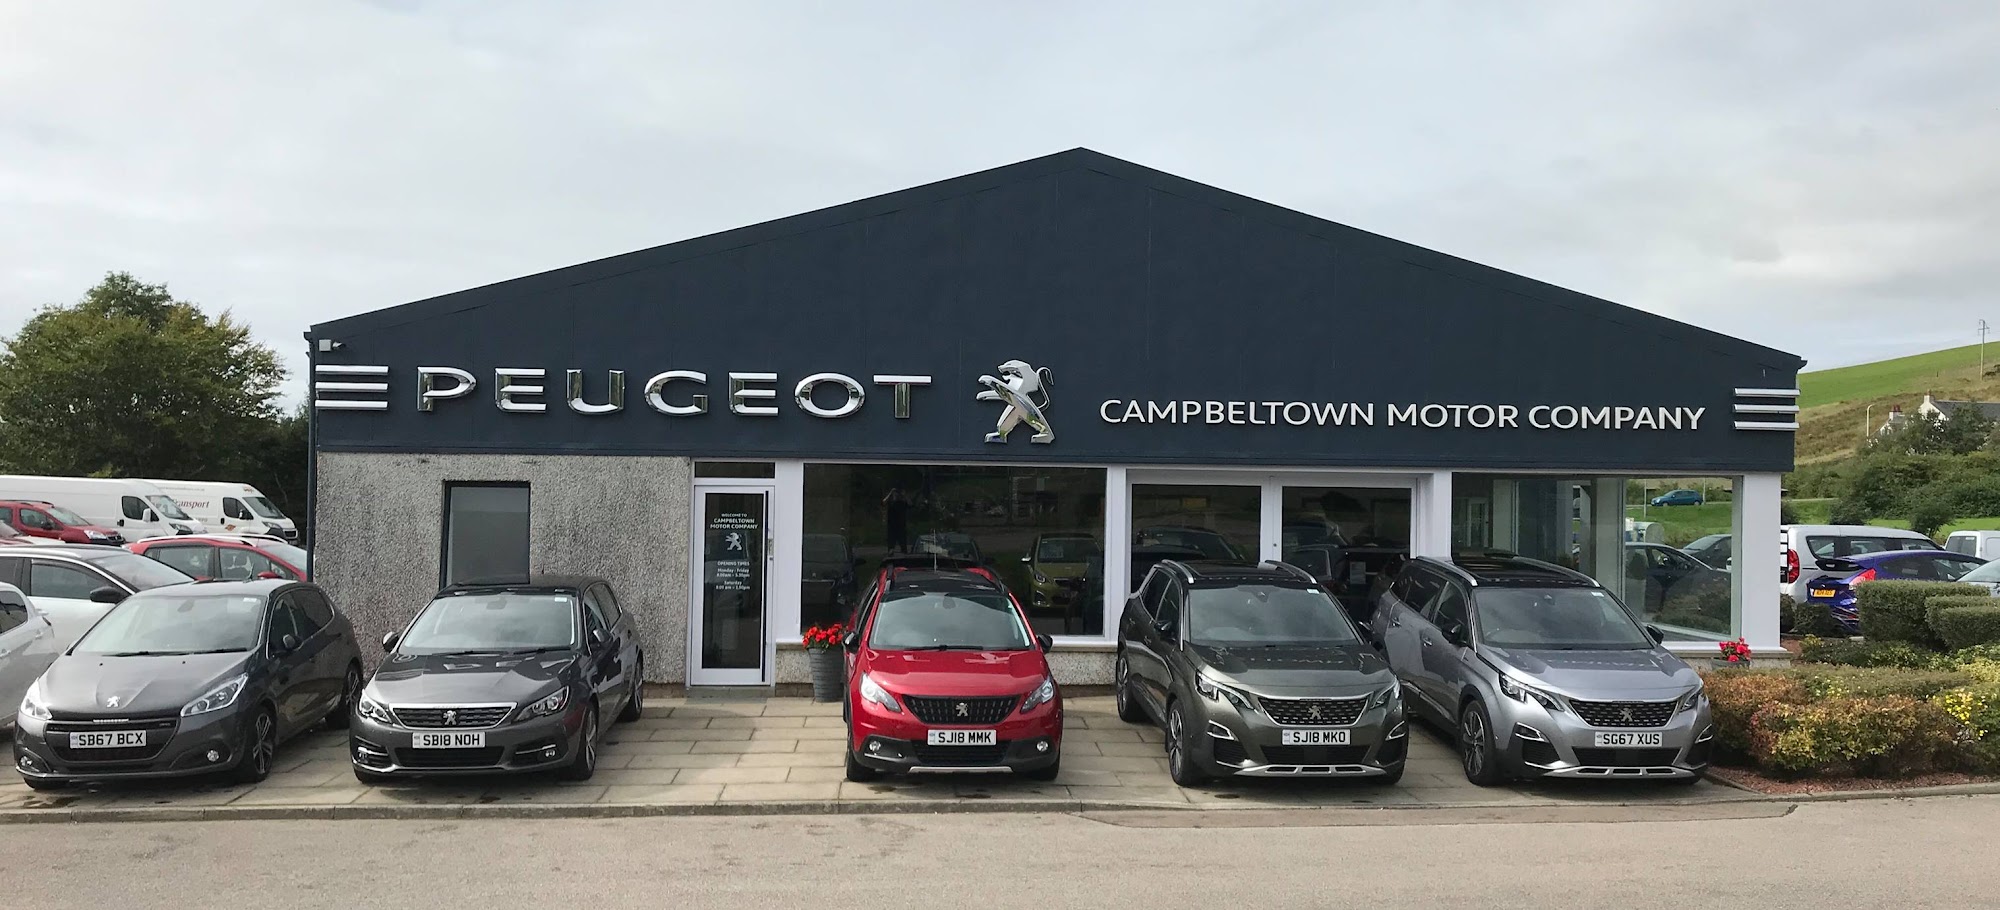 Campbeltown Motor Company